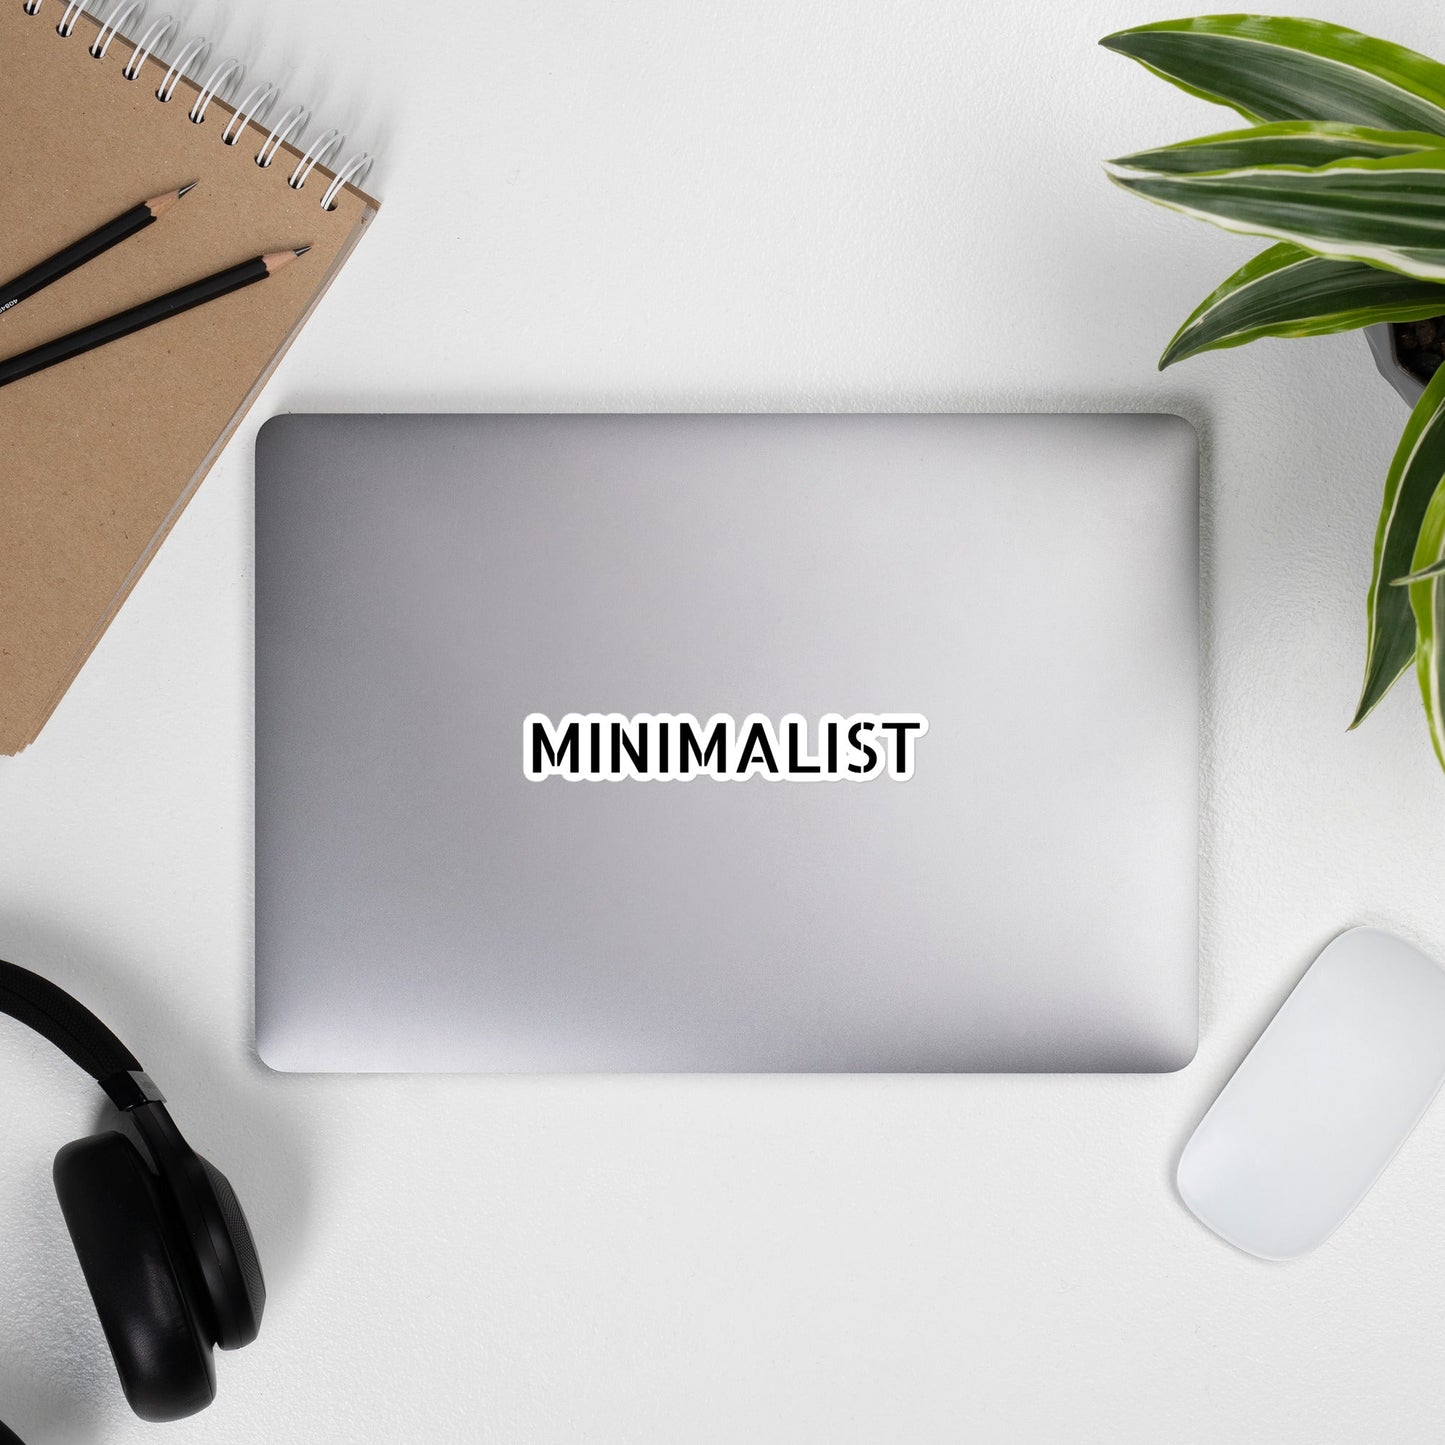 MINIMALIST - Bubble-free stickers - Albasat Designs